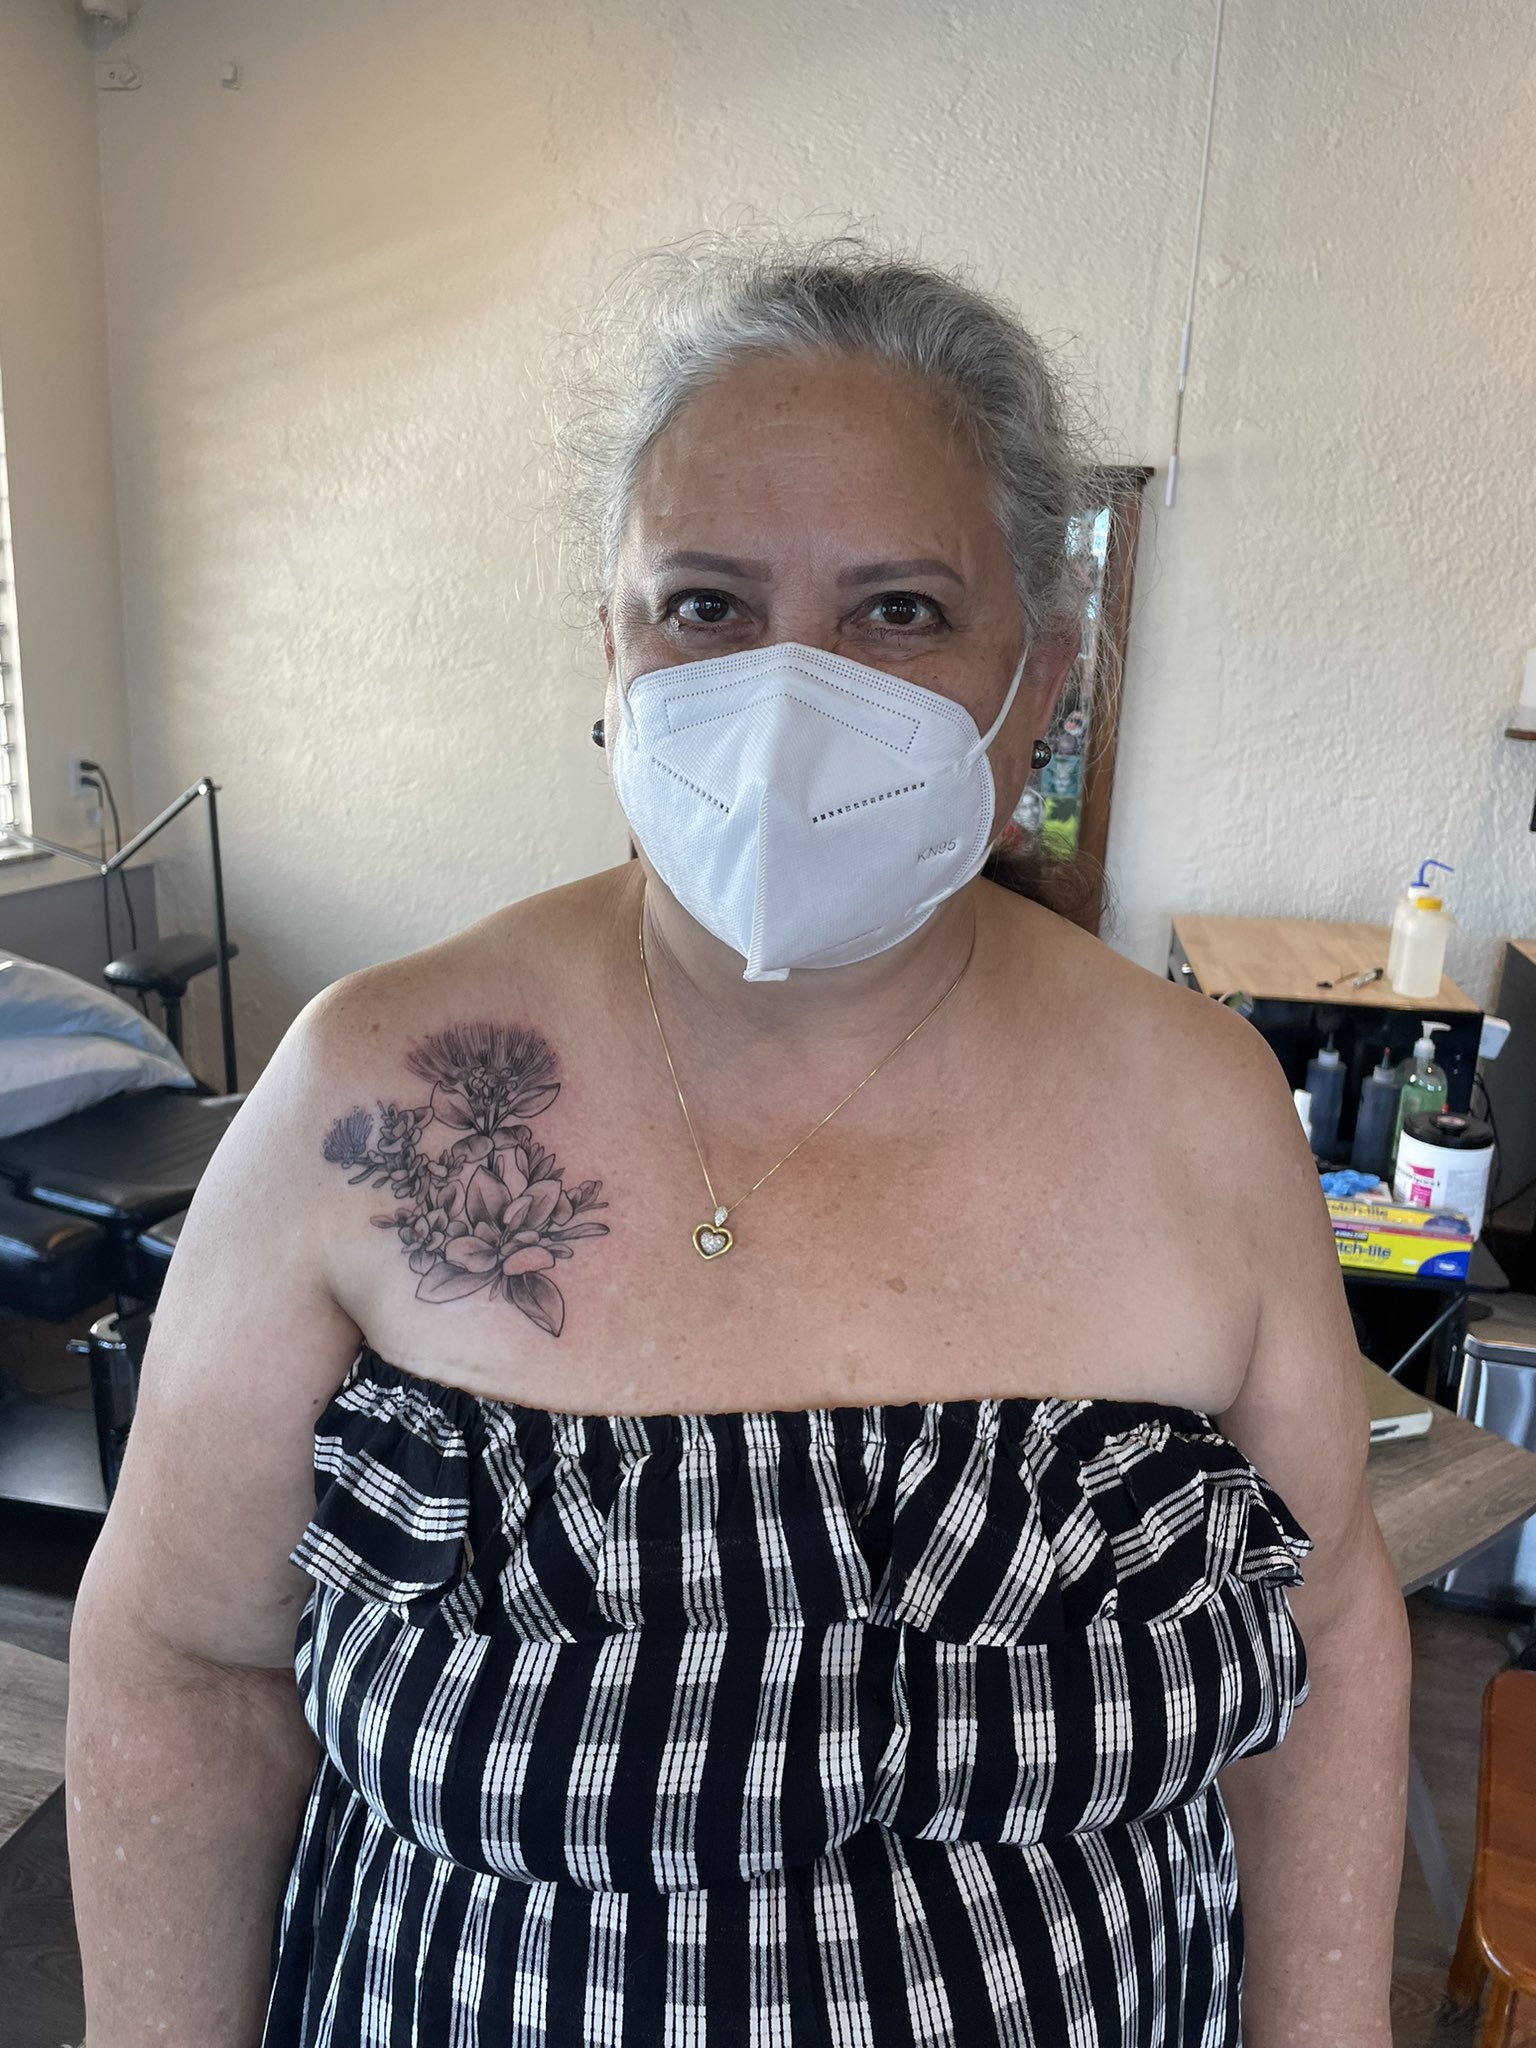 Washington grandmother has bra tattoo after mastectomy